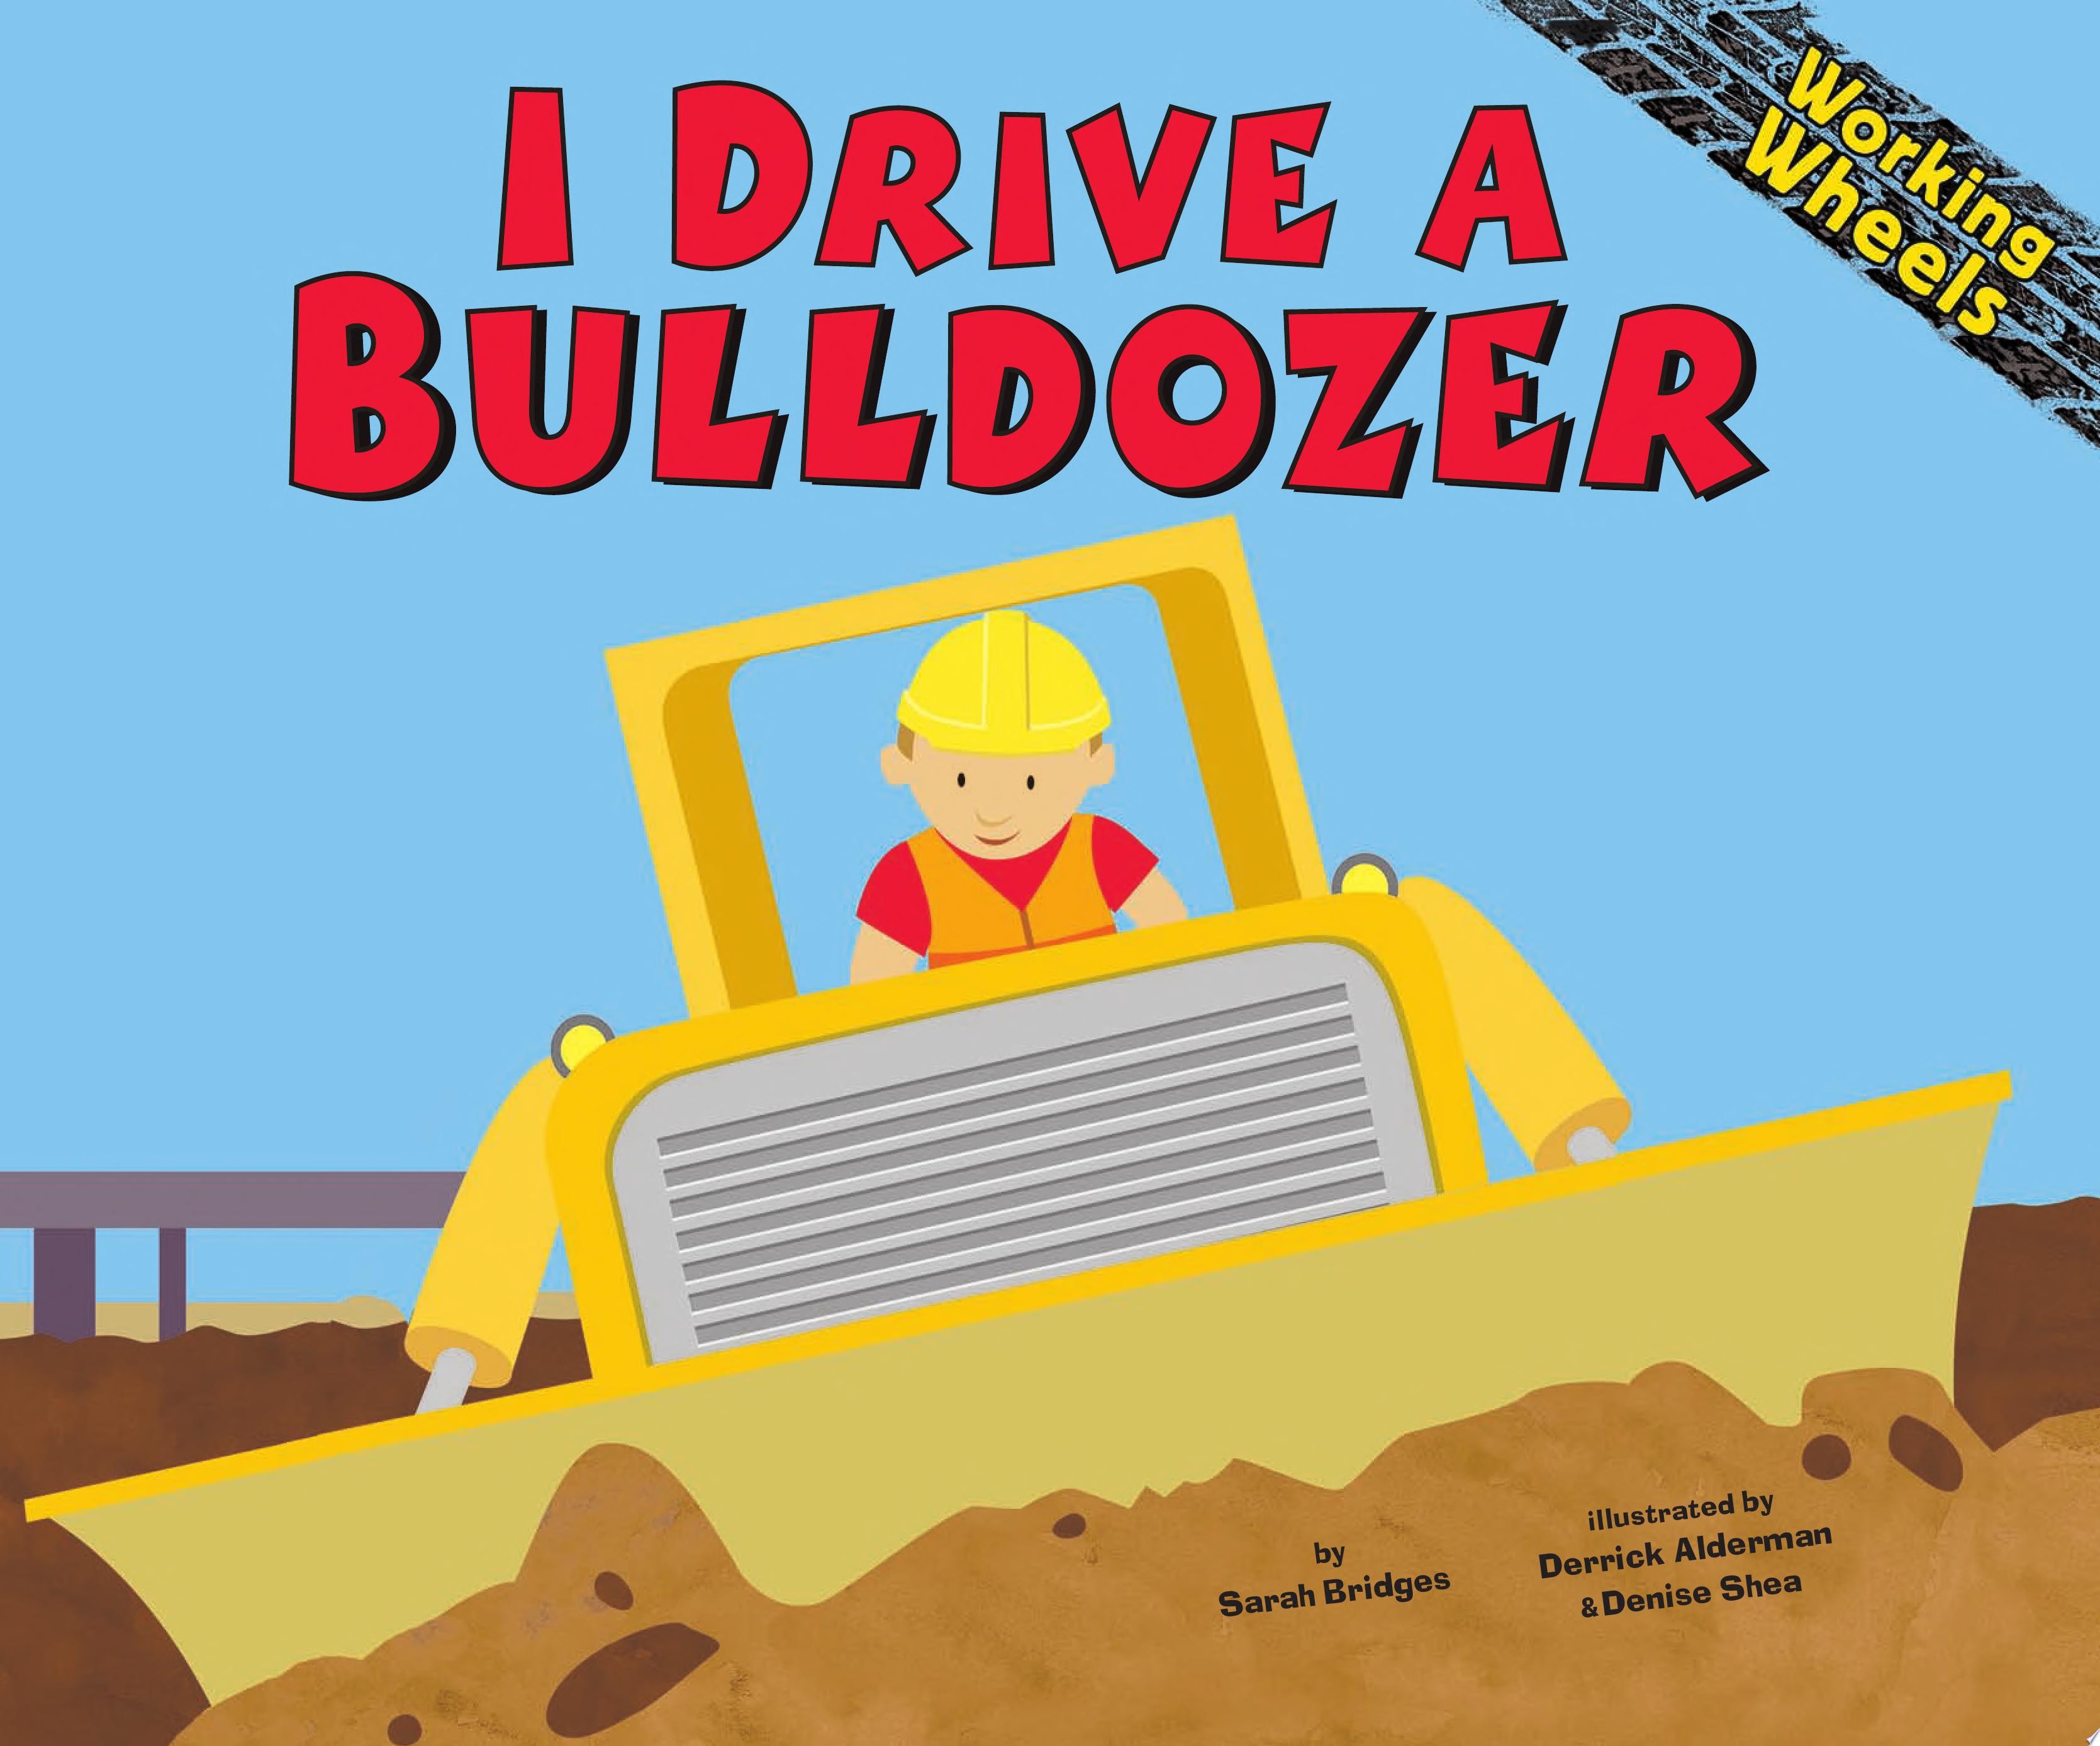 Image for "I Drive a Bulldozer"